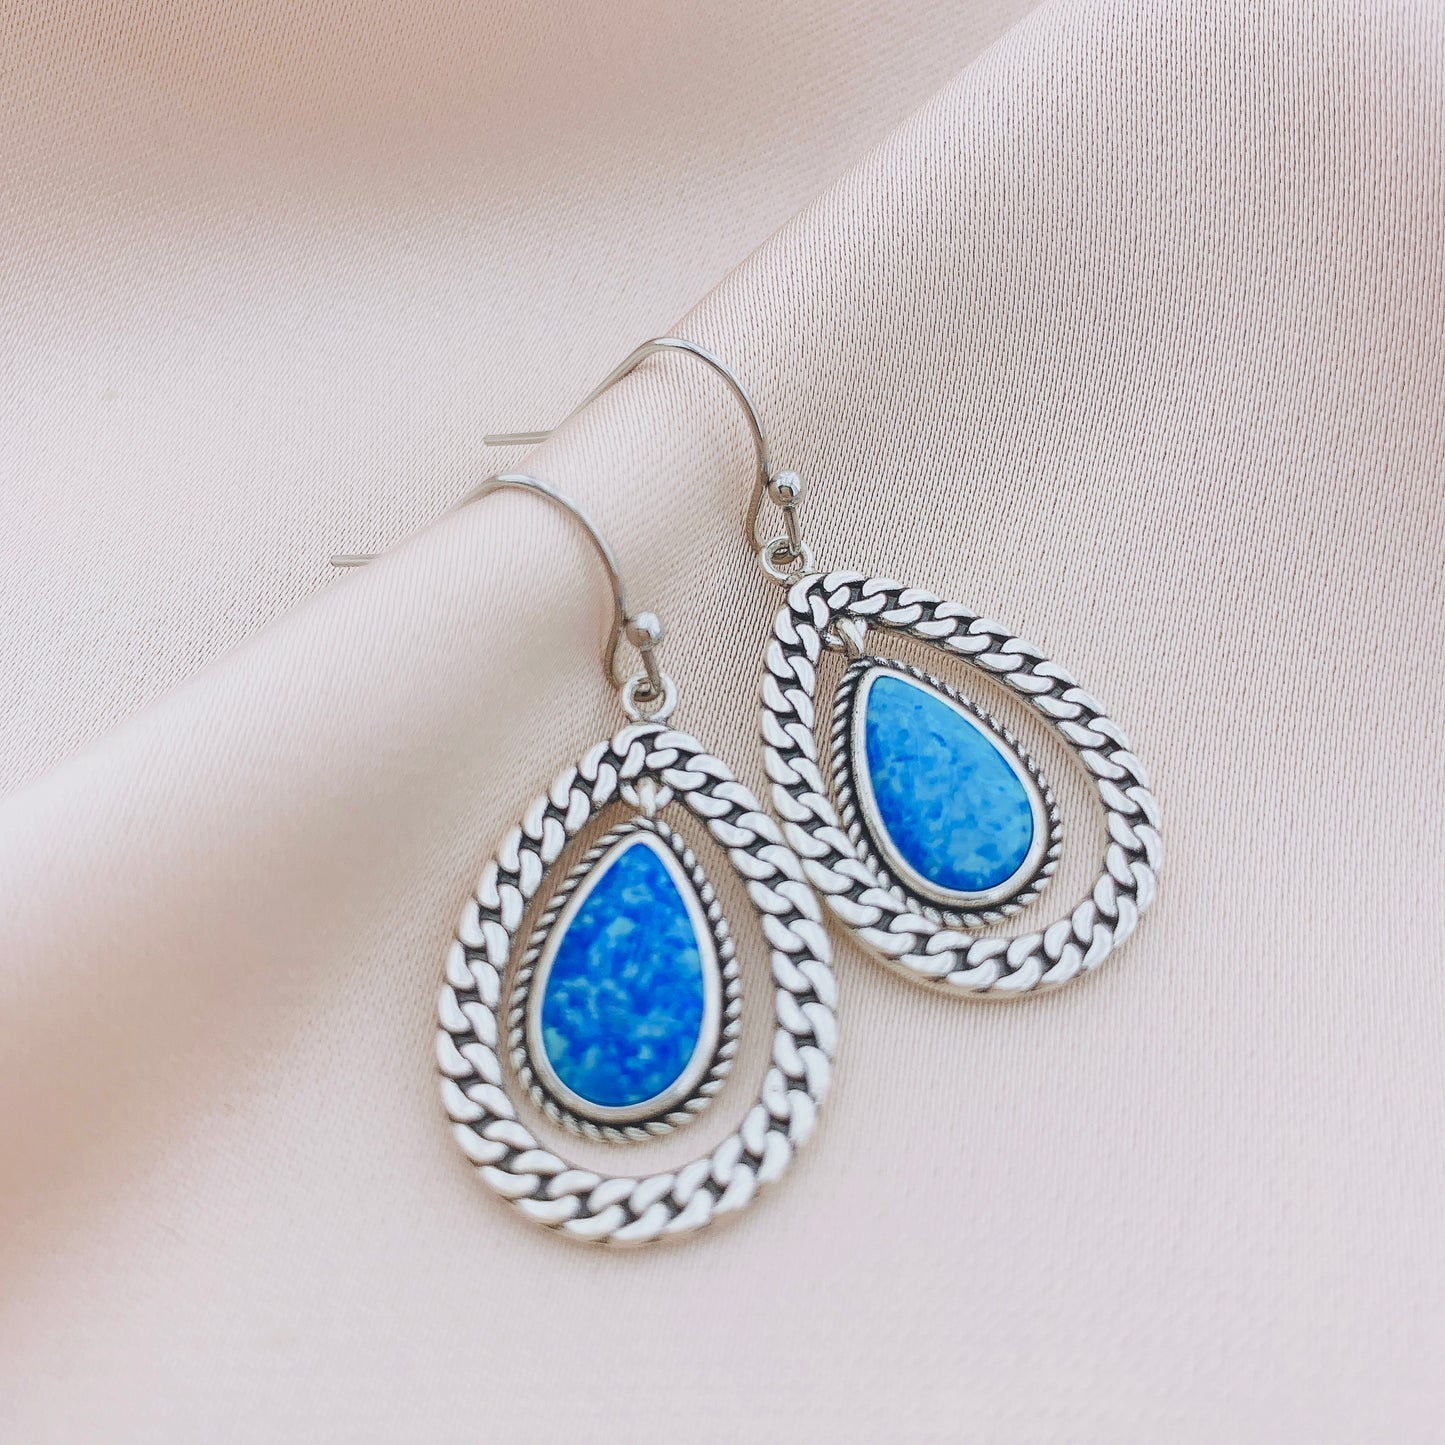 Women's Fashion Turquoise/Opal Antique Vintage Jewelry Sets